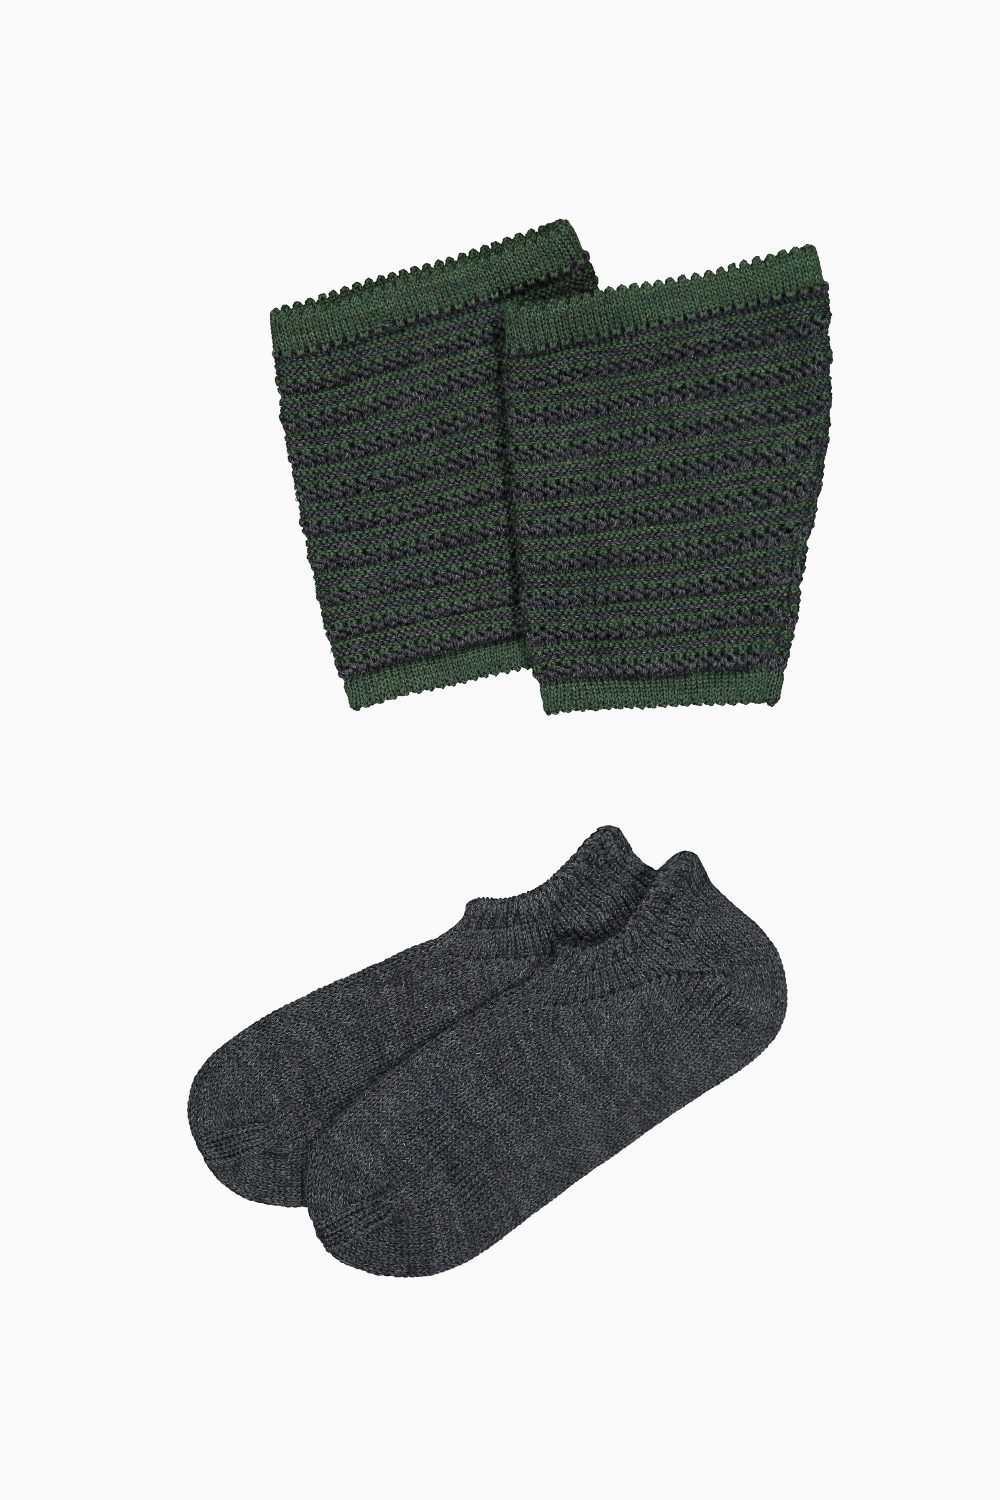 Eibsee Traditional Two-Part Socks - Gottseidank